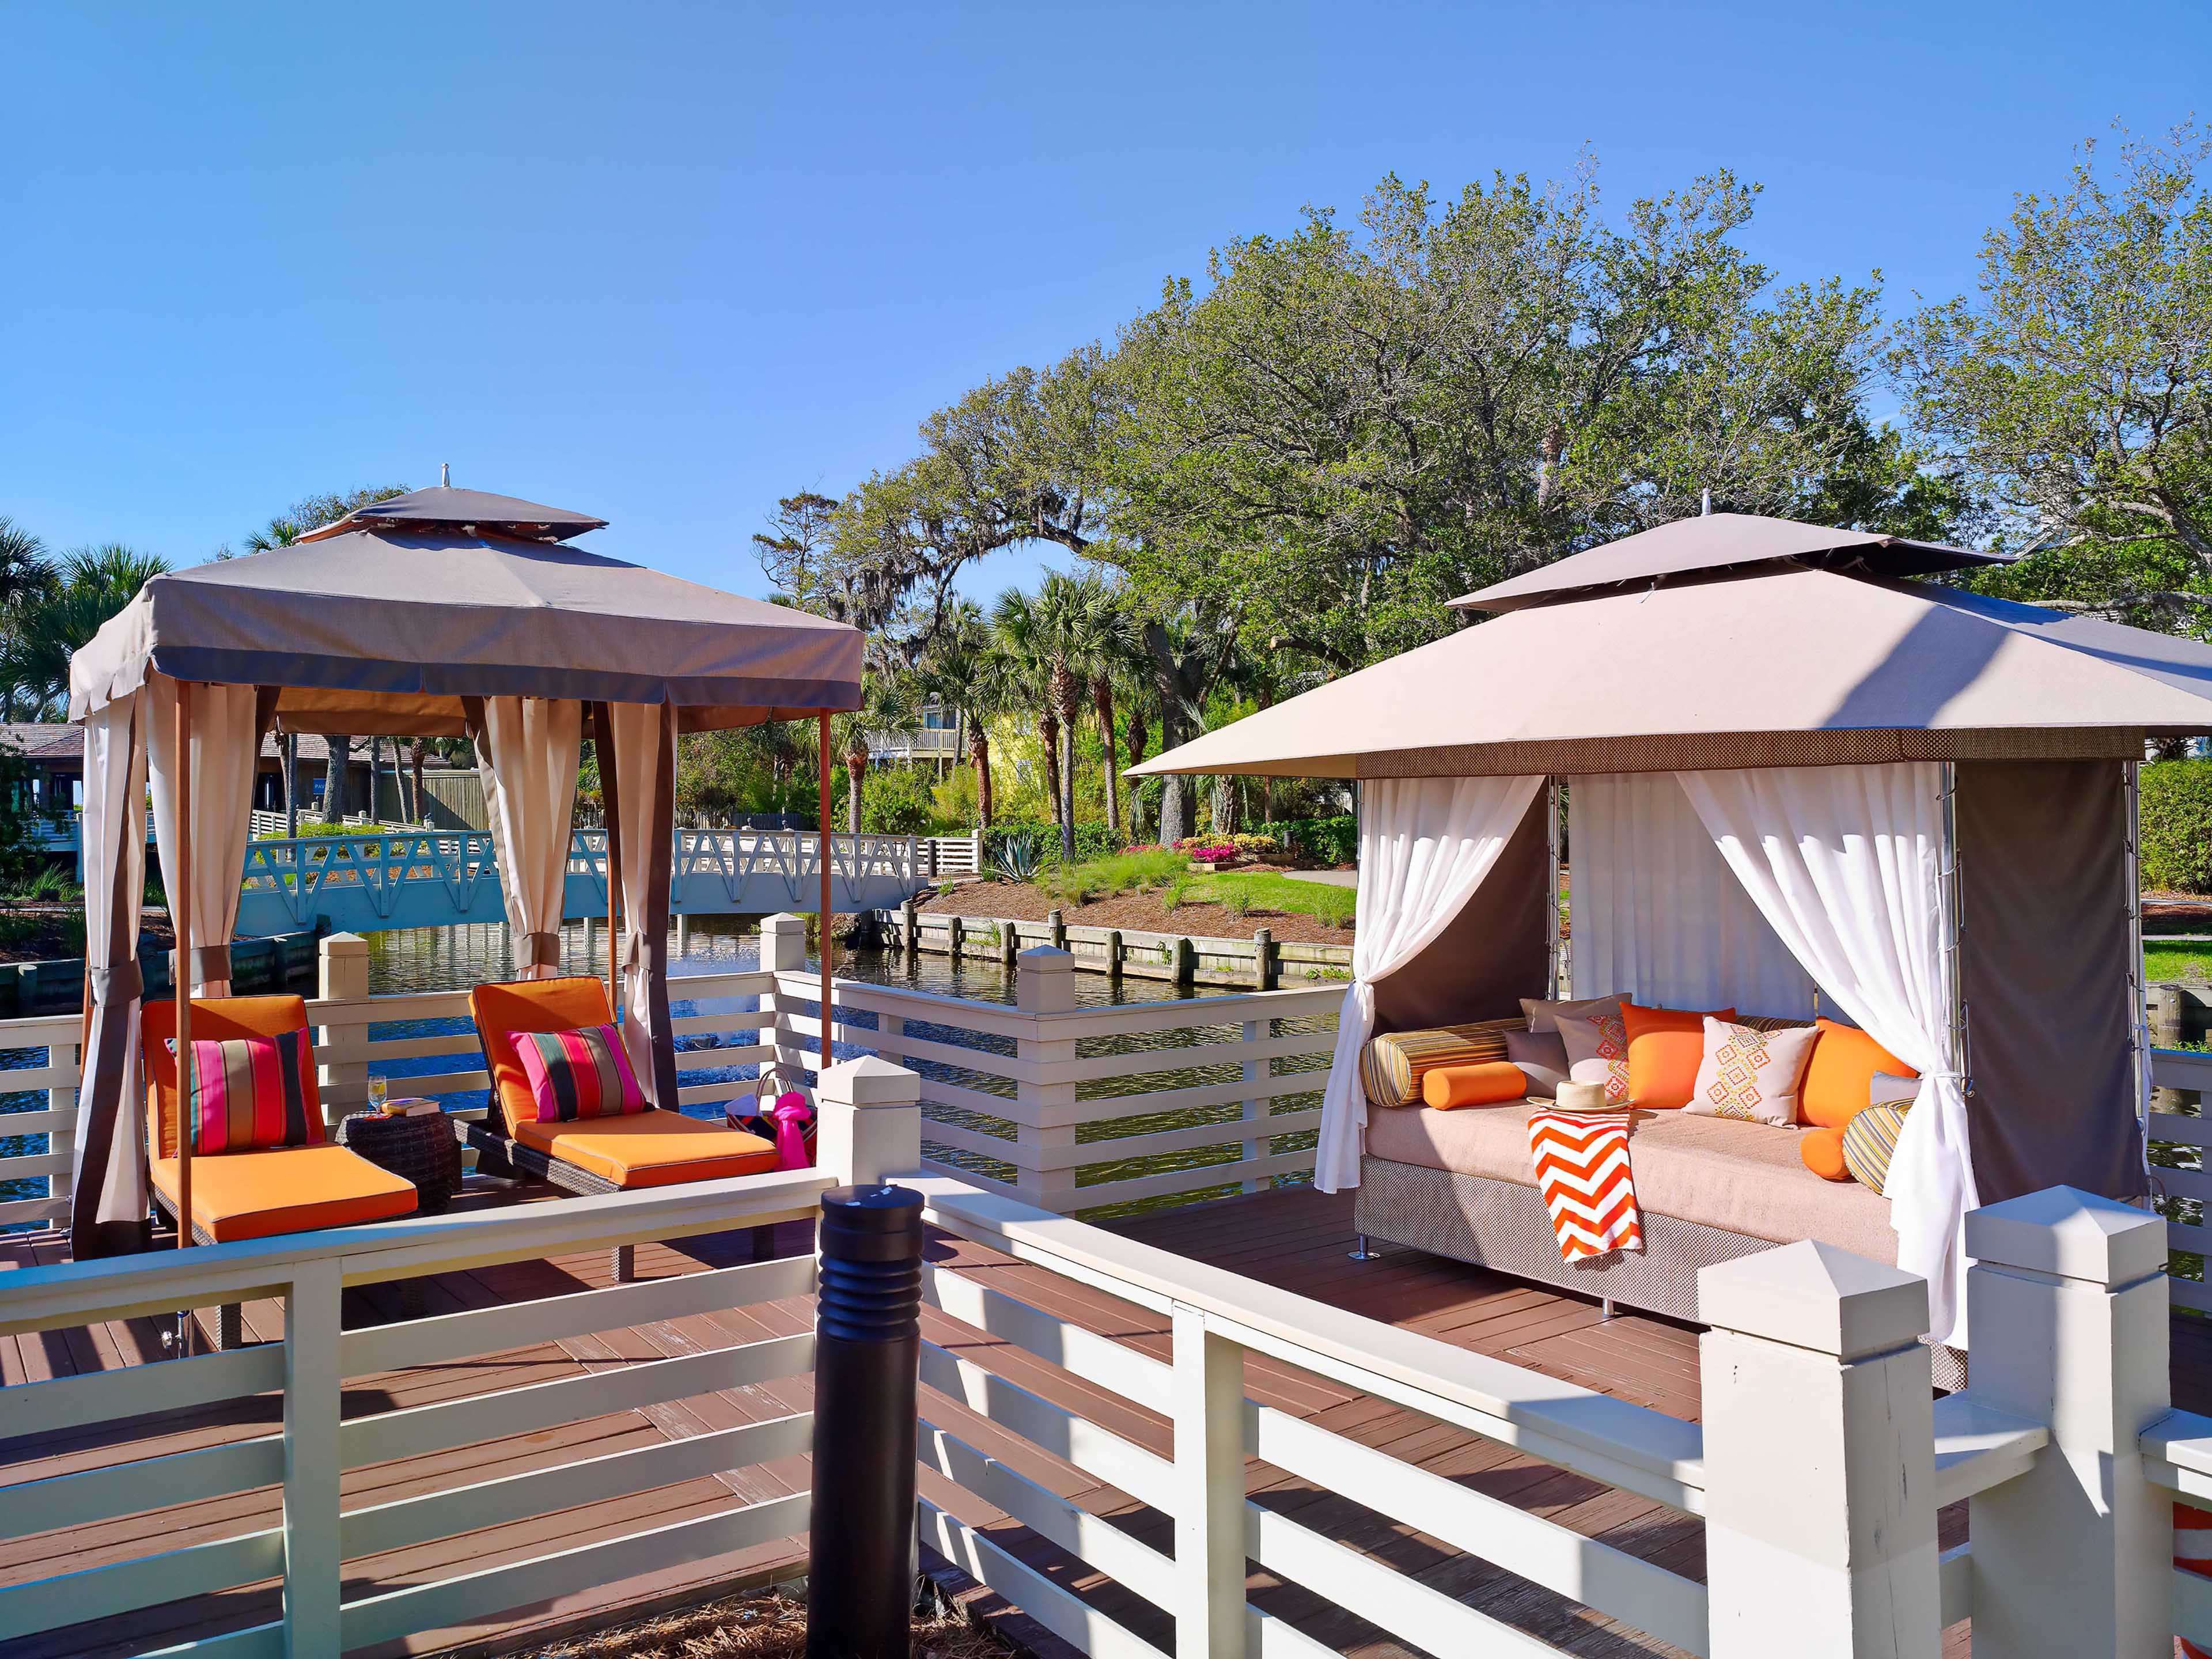 Sonesta Resort Hilton Head Island Hilton Head Island (843)842-2400